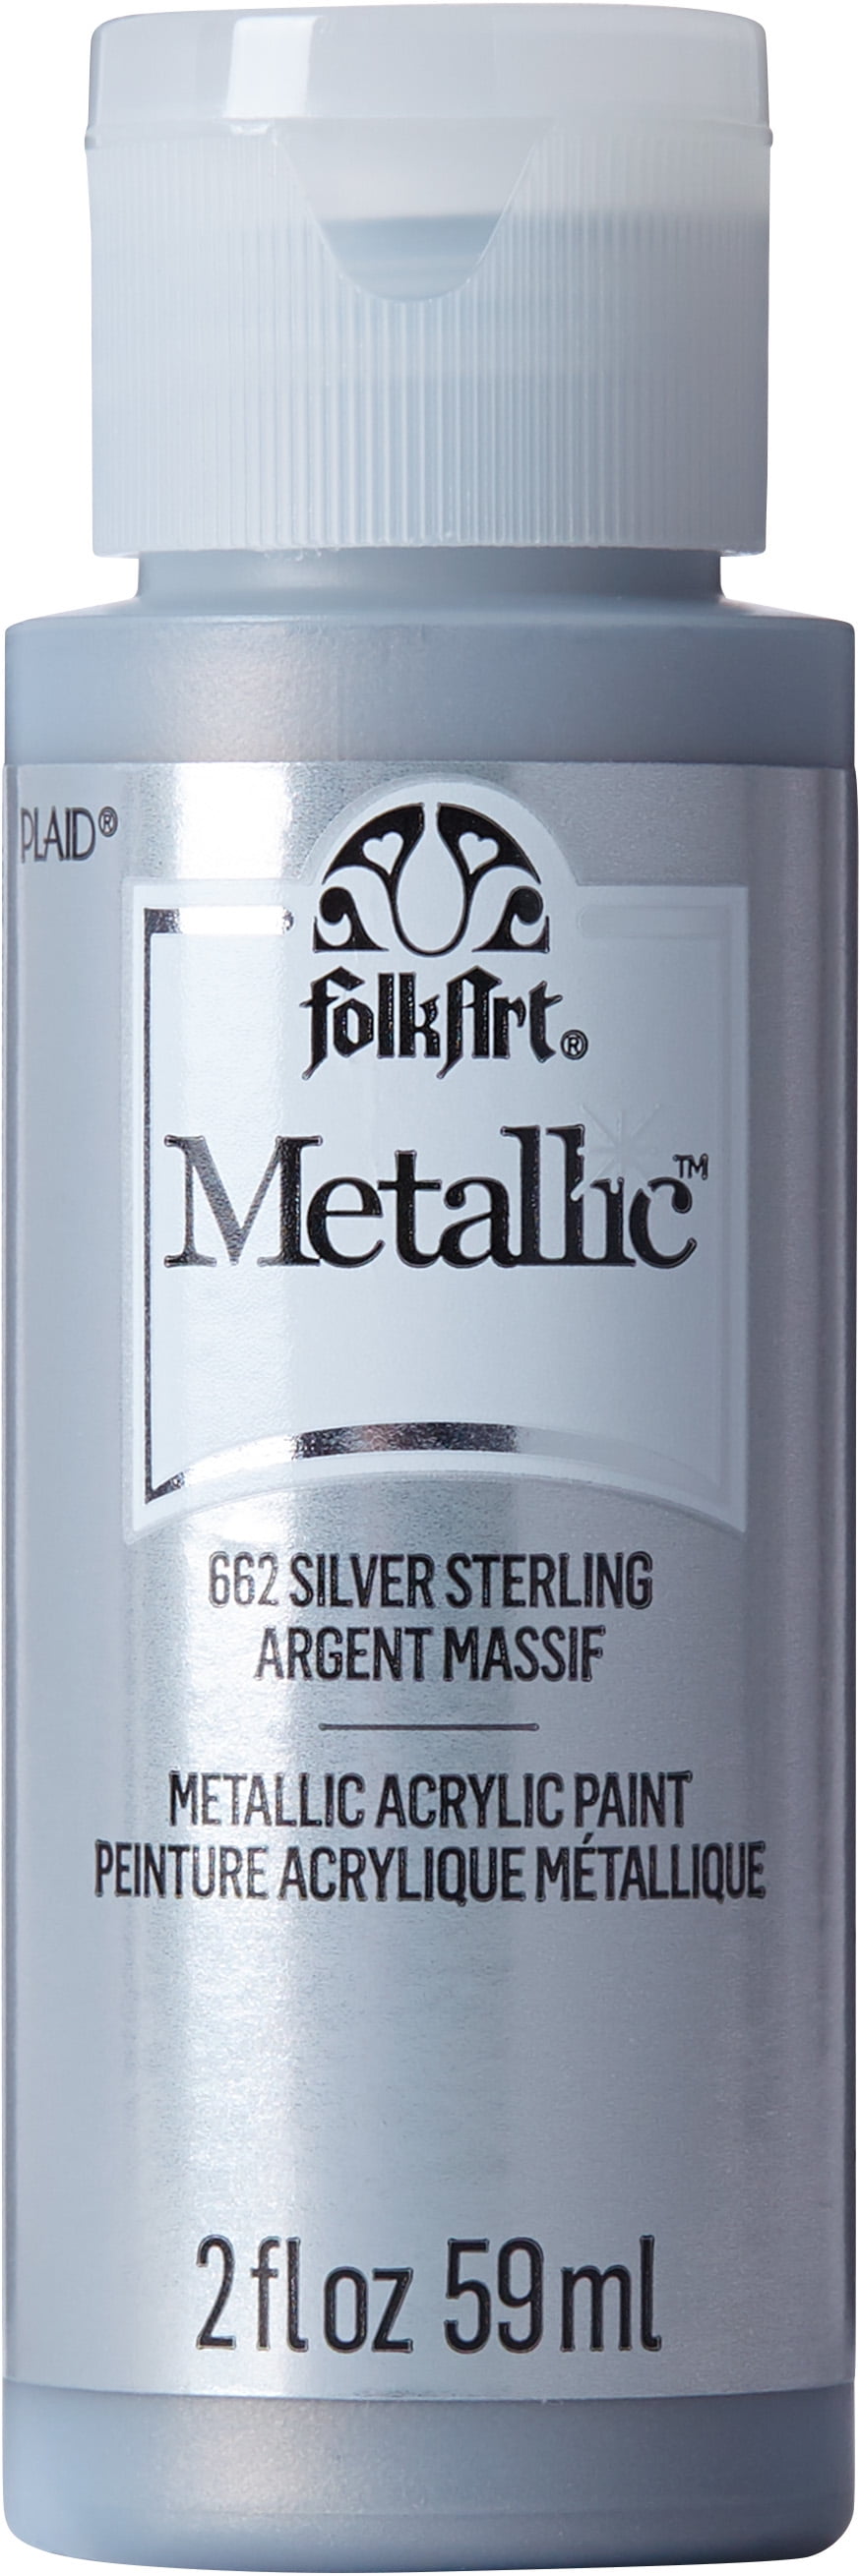 FolkArt Metallic Acrylic Craft Paint, Metallic Finish, Silver Sterling, 2 fl oz